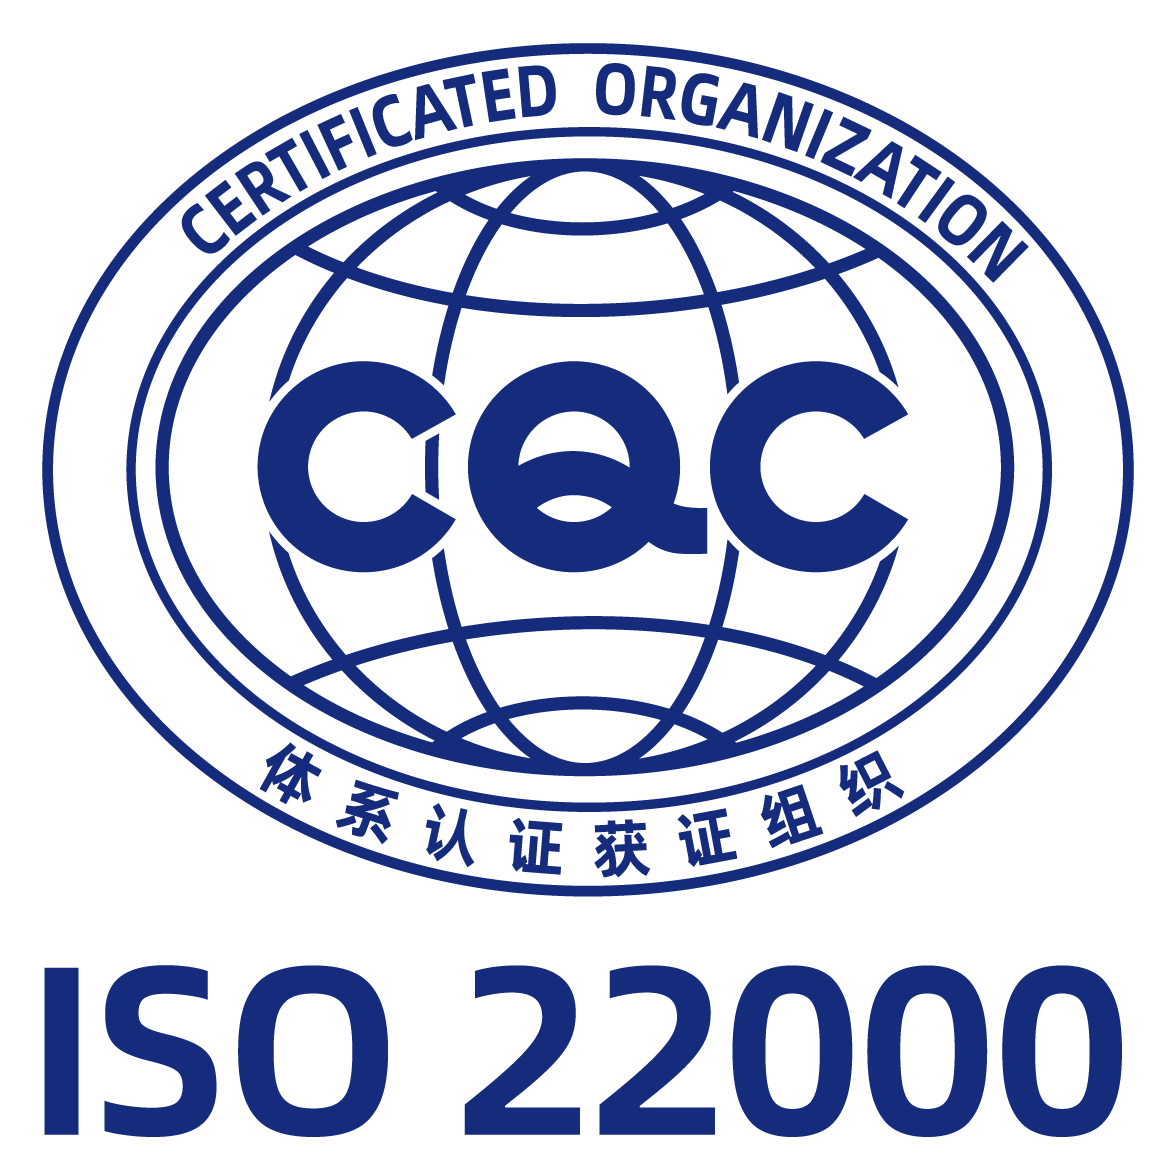 ISO 22000 食品安全管理体系认证